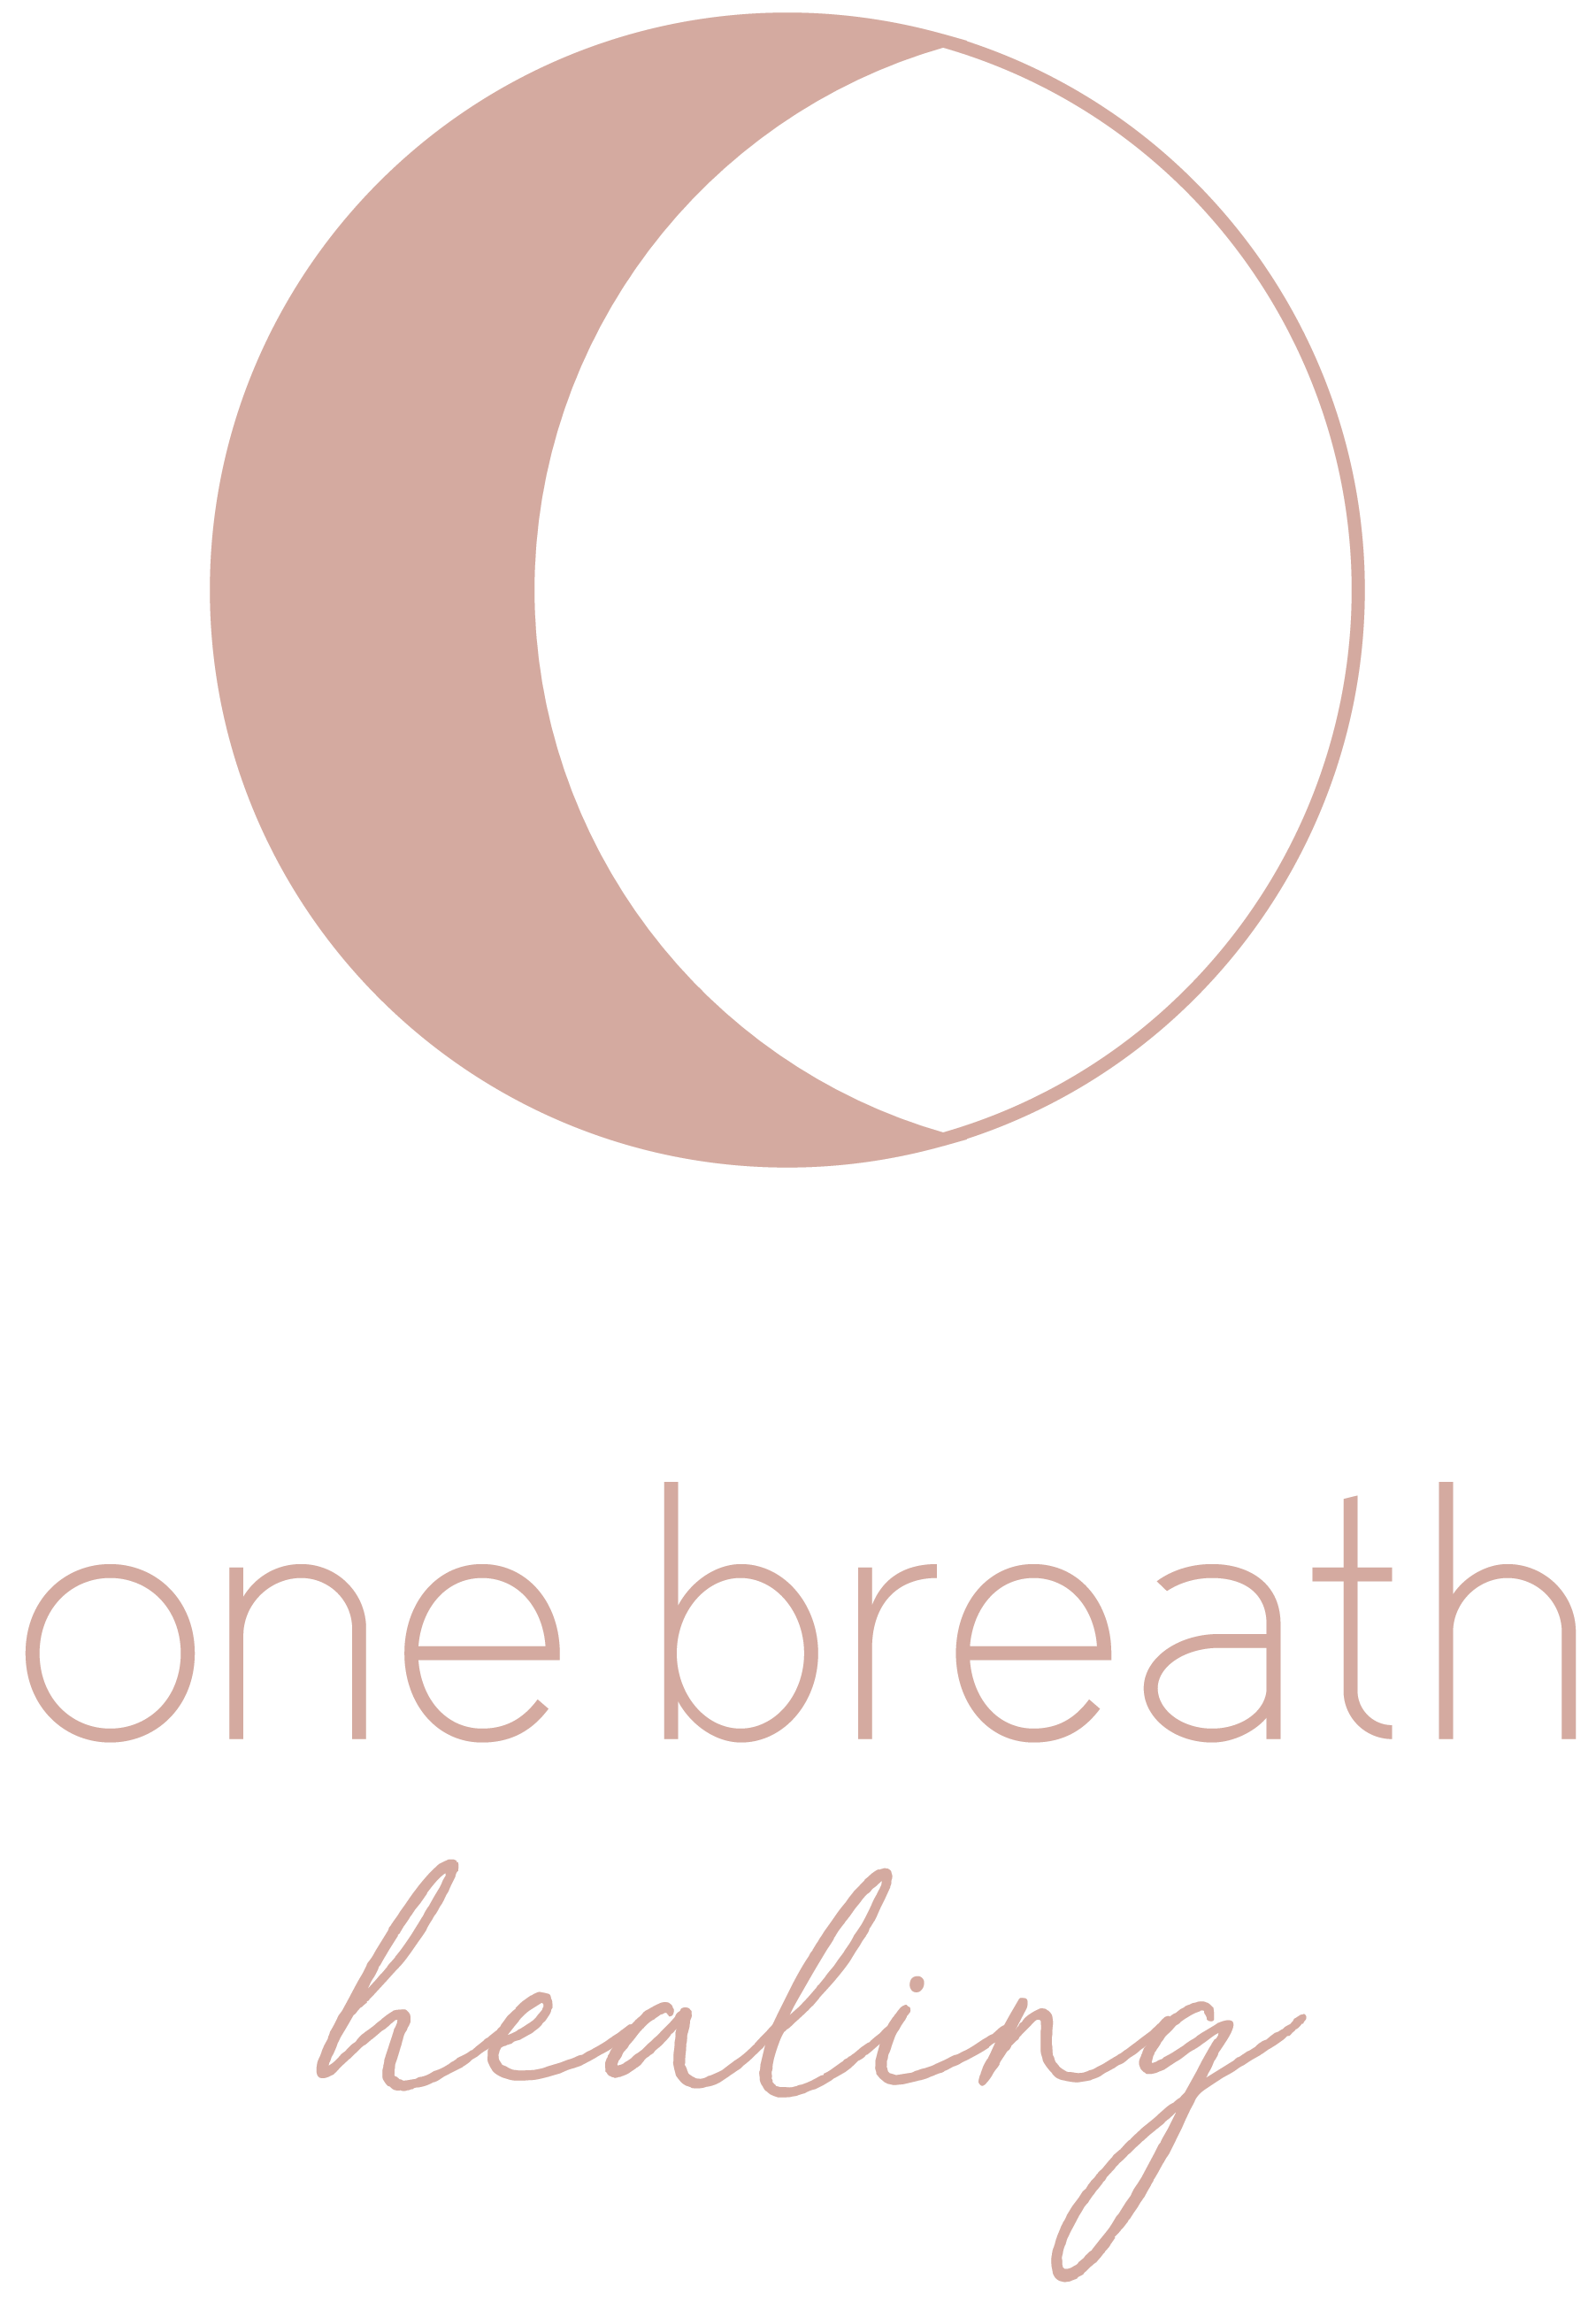 One Breath Healing